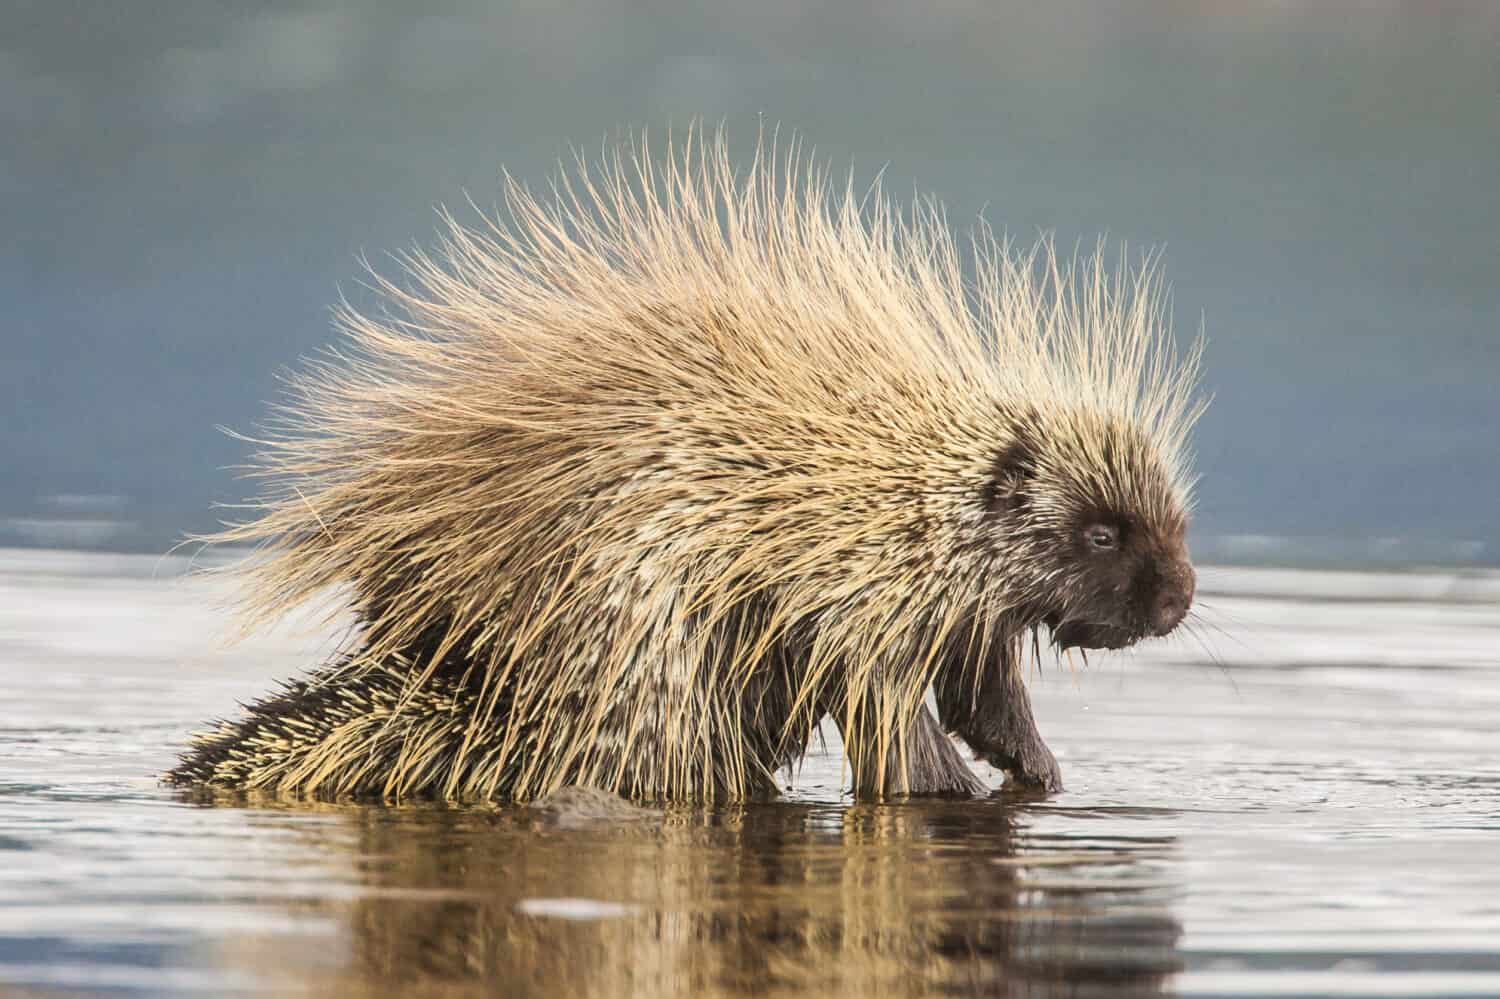 Harmless wild animal in Canada: North American Porcupine Erethizon dorsatum in water in Teslin, Yukon, Canada